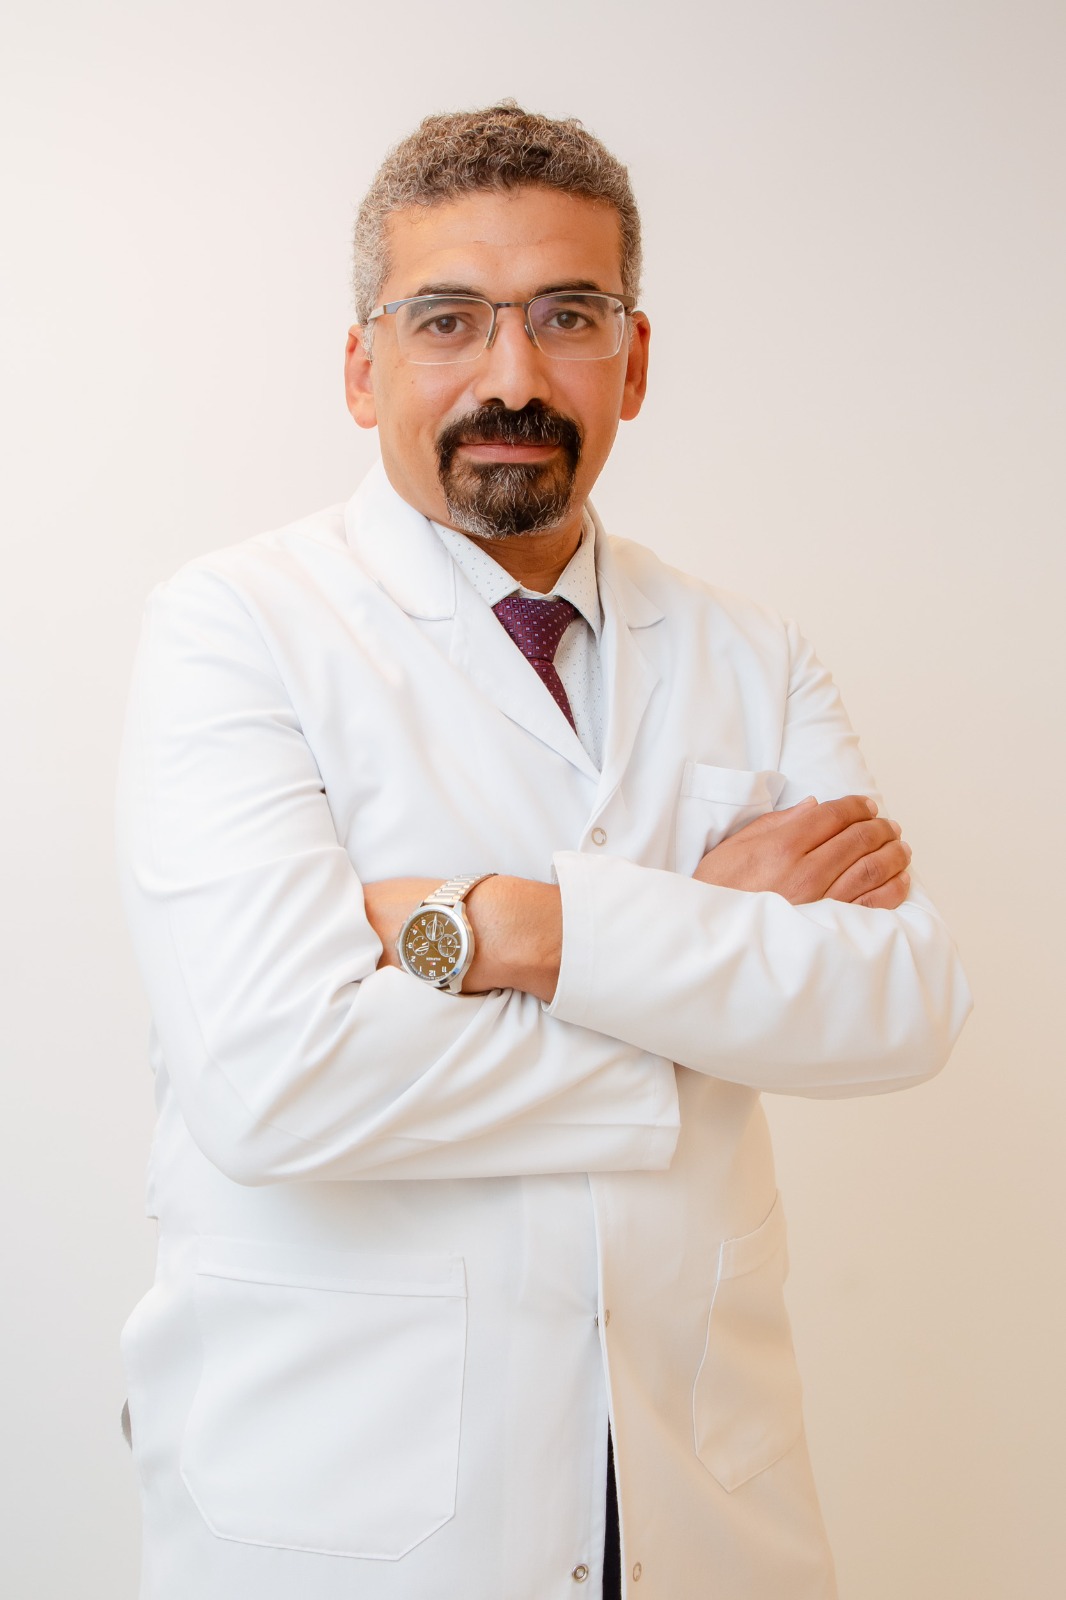 Dr. Walid Fadl Allah